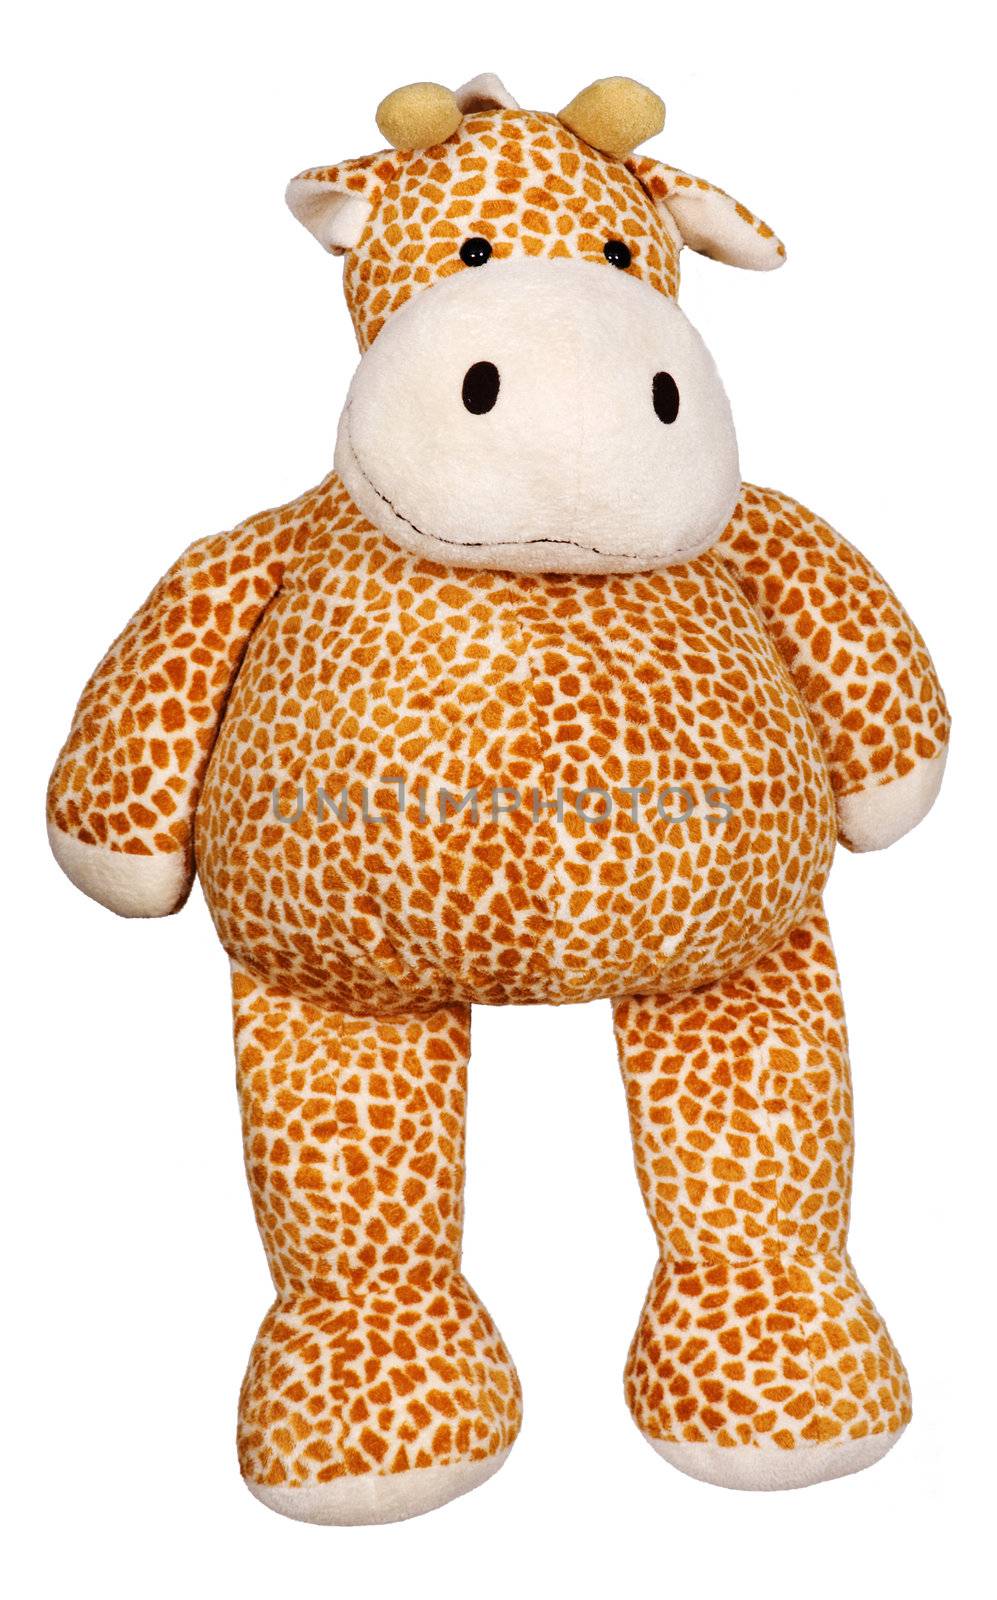 Toy giraffe on a white background